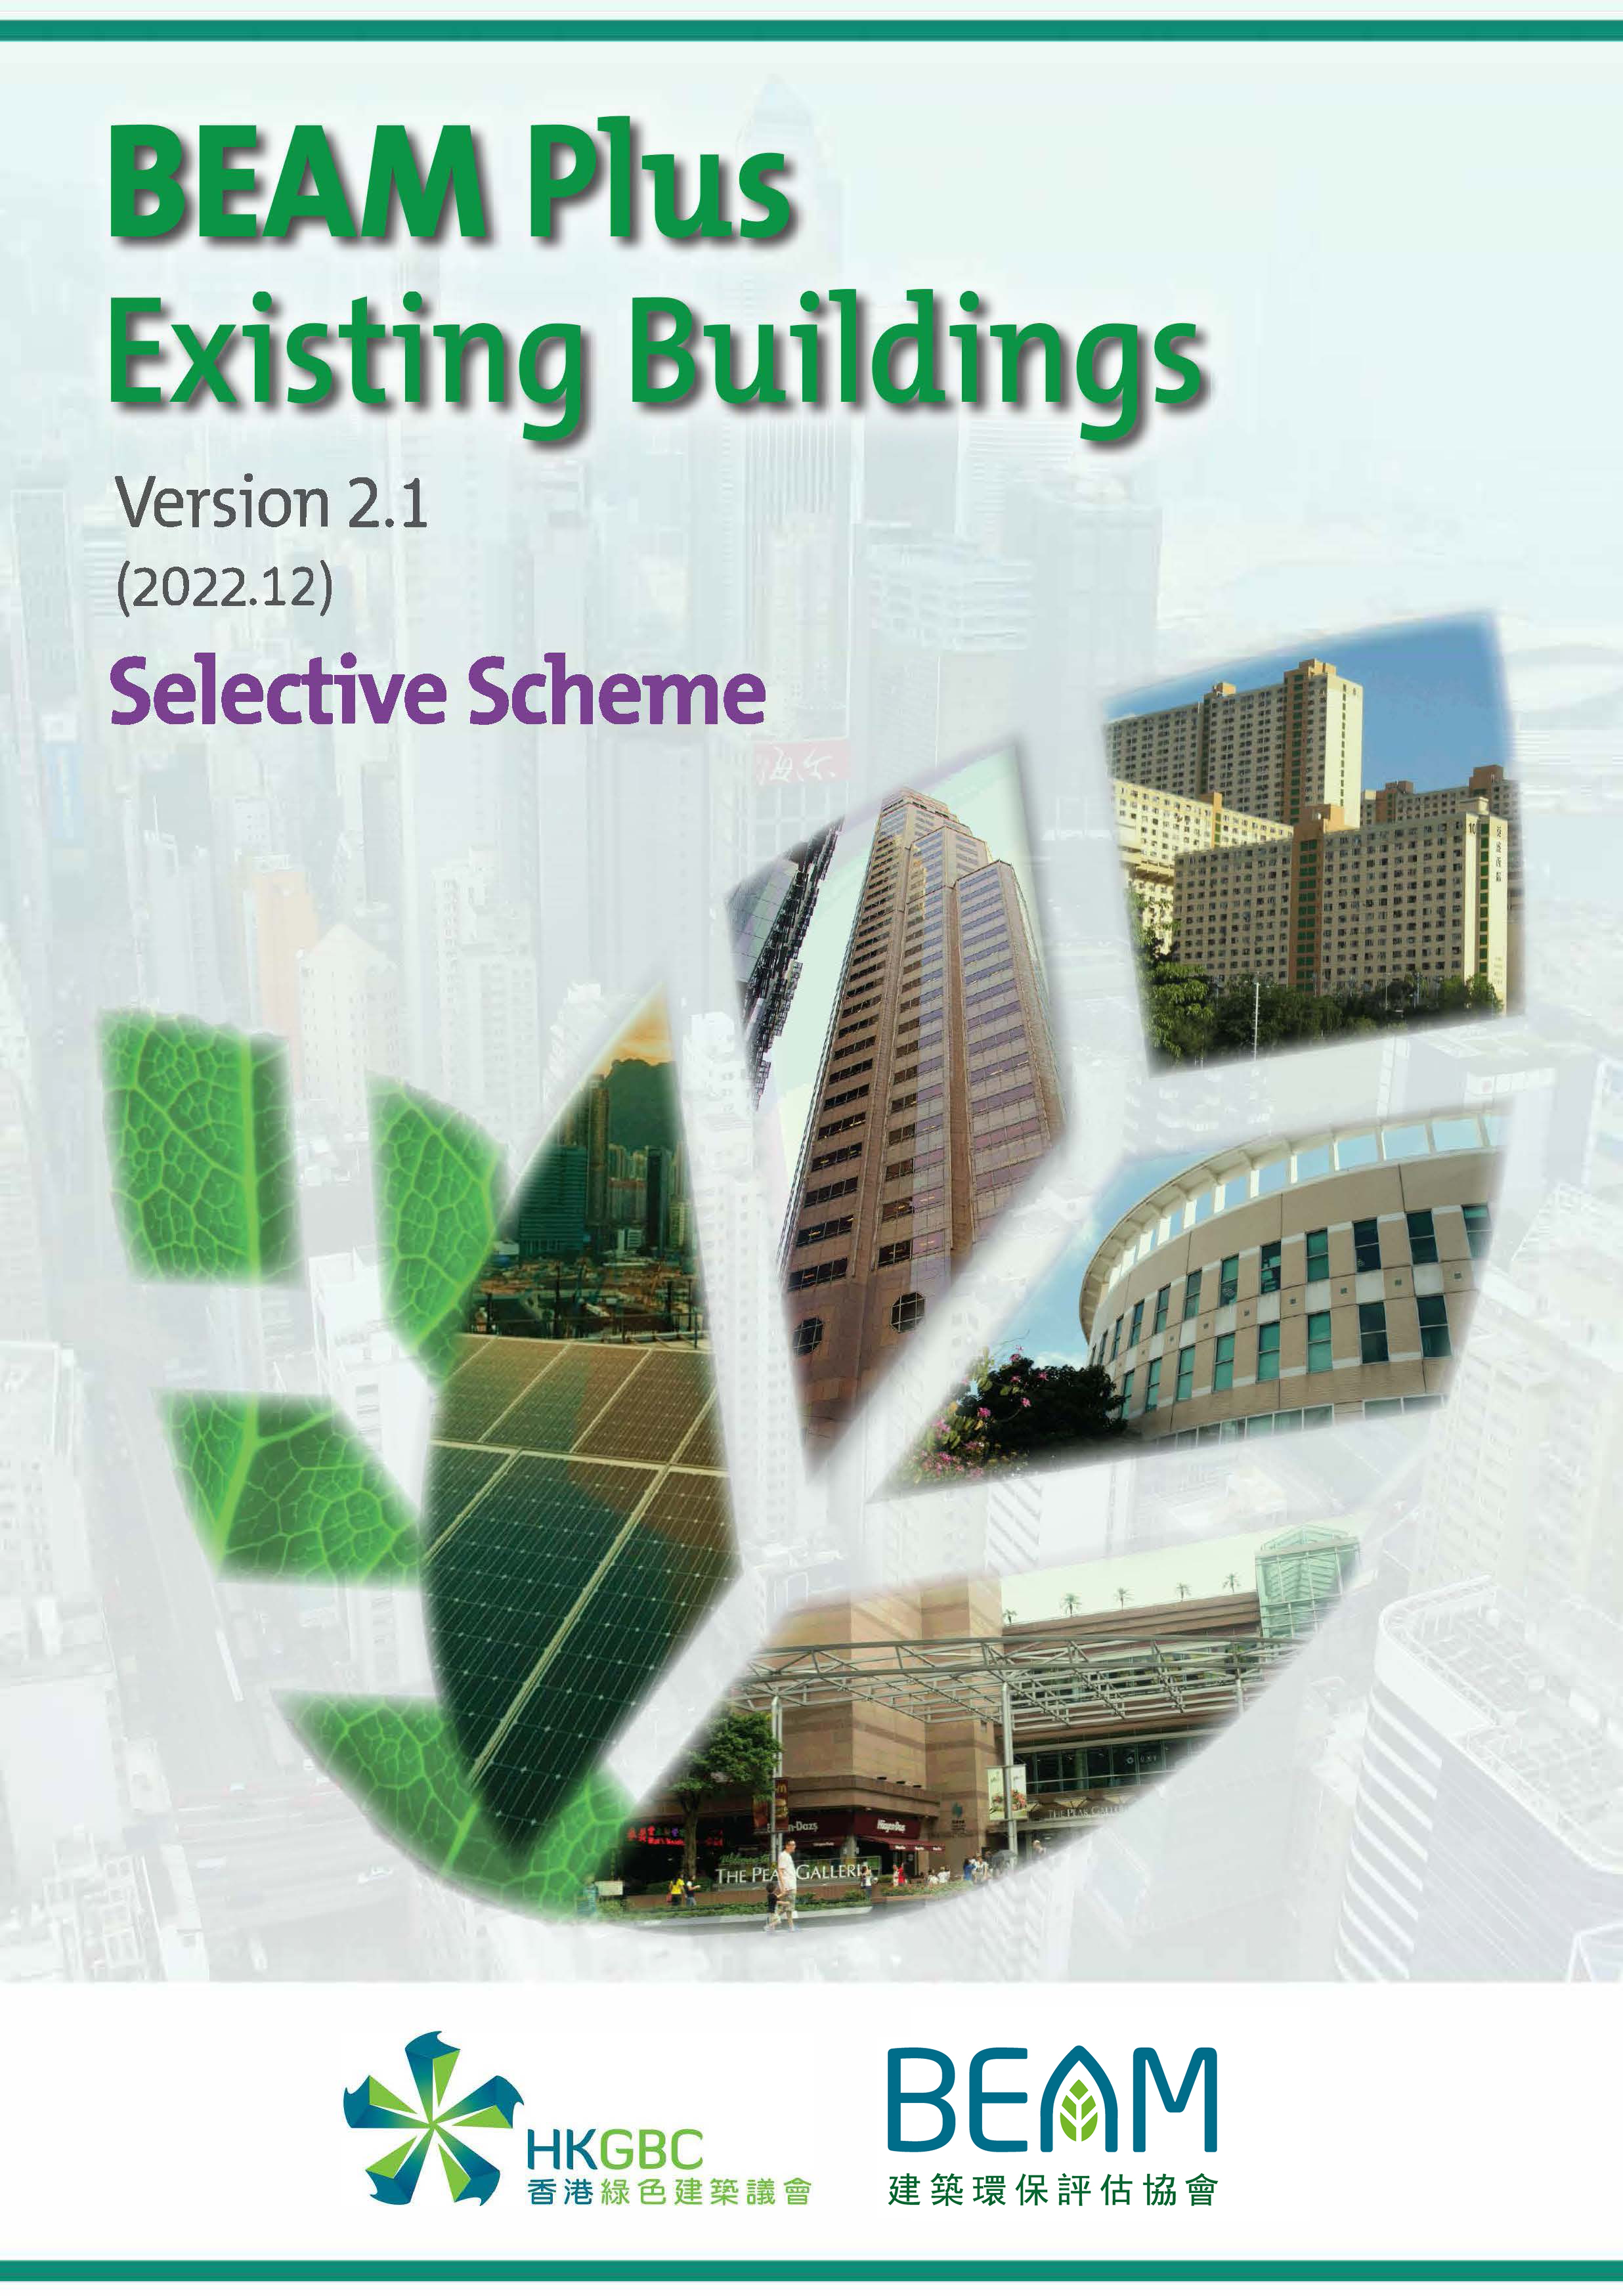 BEAM Plus Existing Buildings Version 2.1 – Selective Scheme